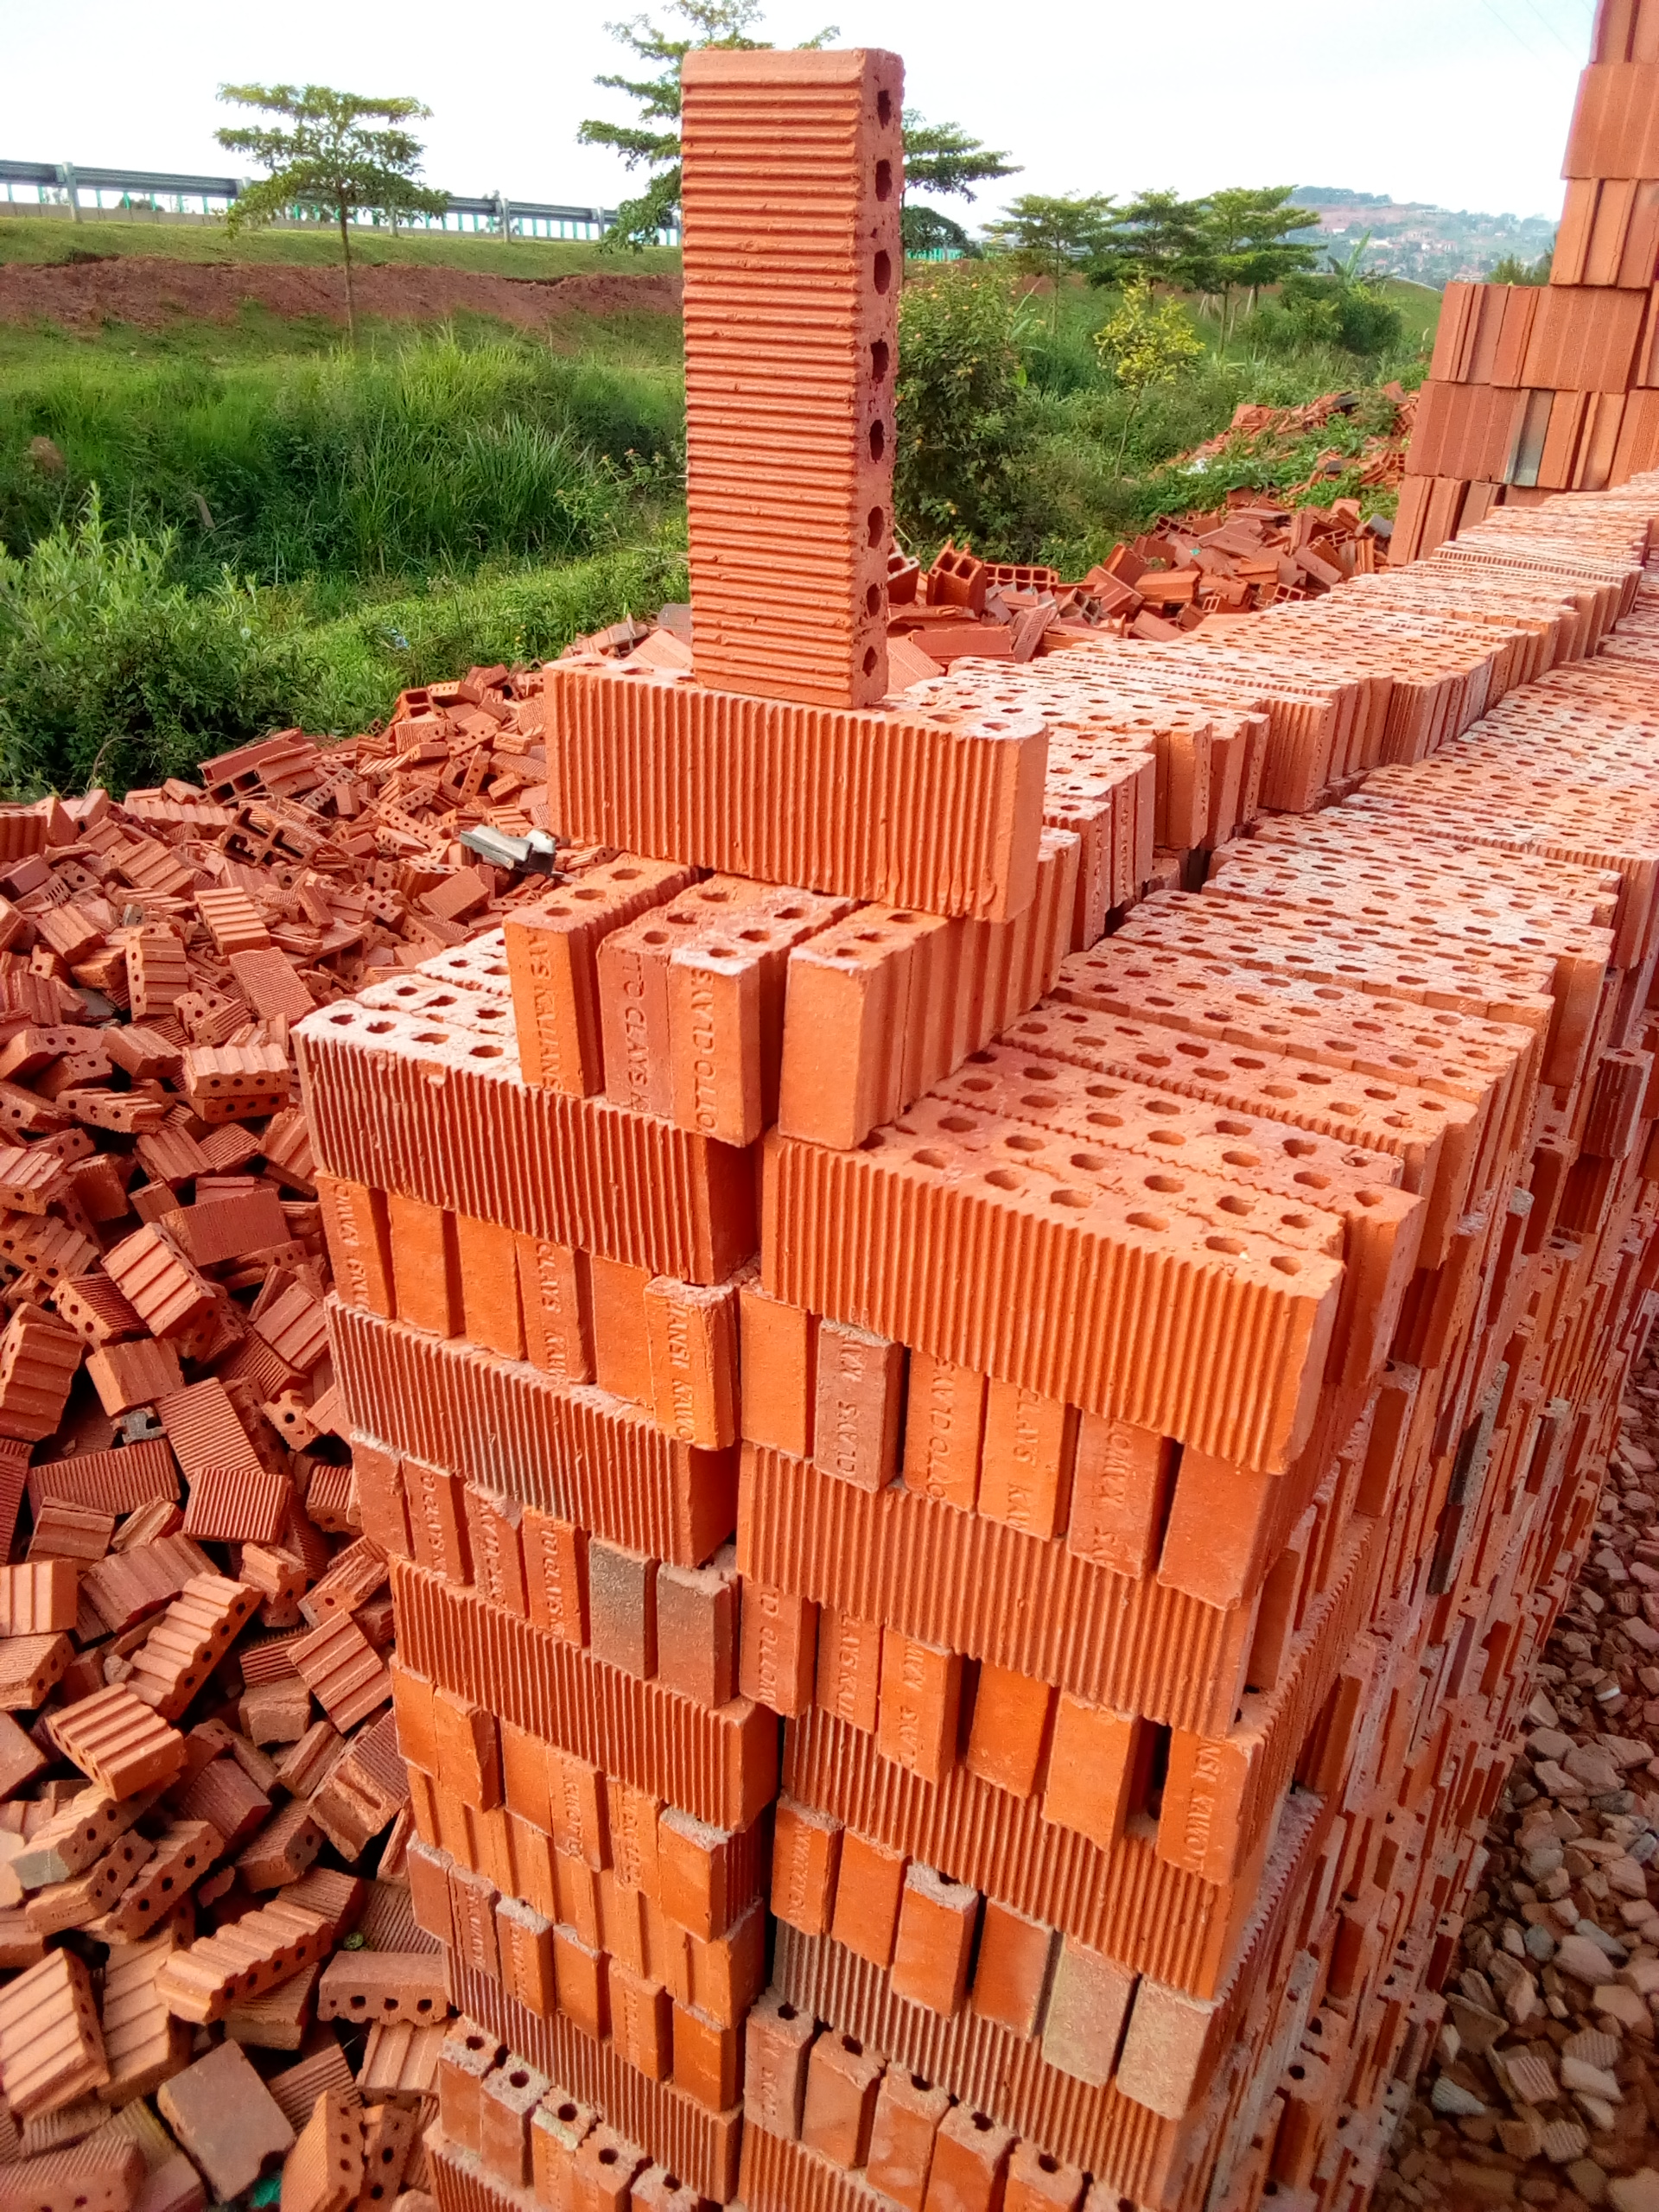 Suppliers of half bricks in Kampala